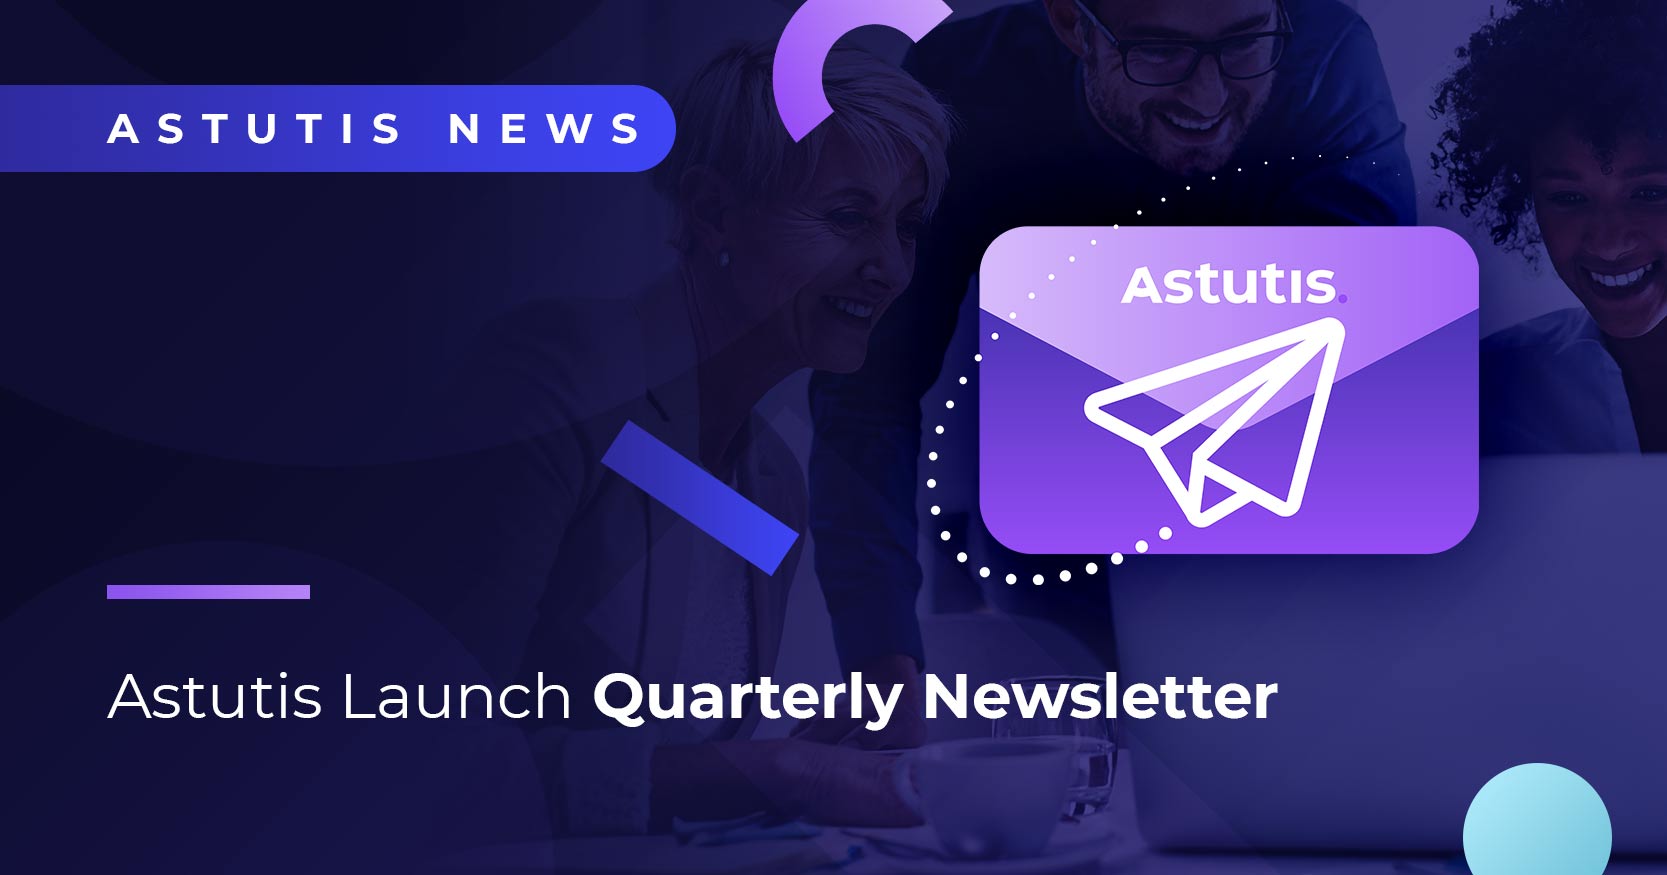 Astutis Launch Quarterly Newsletter Image